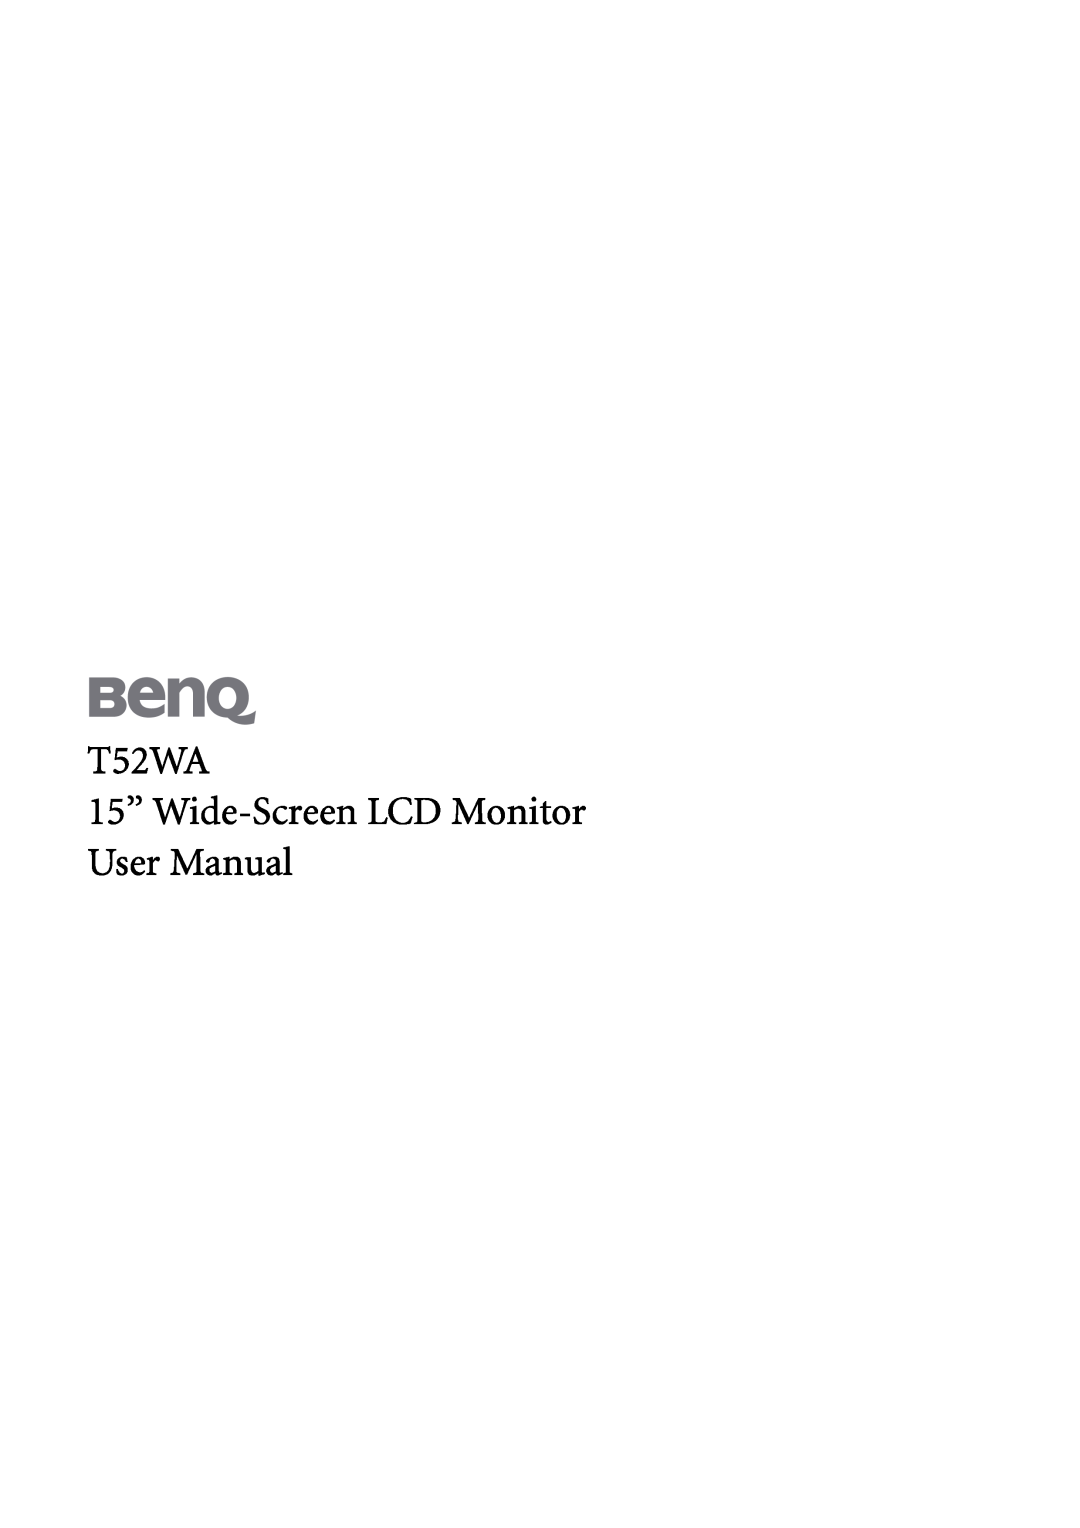 BenQ user manual T52WA 15’’ Wide-Screen LCD Monitor User Manual 